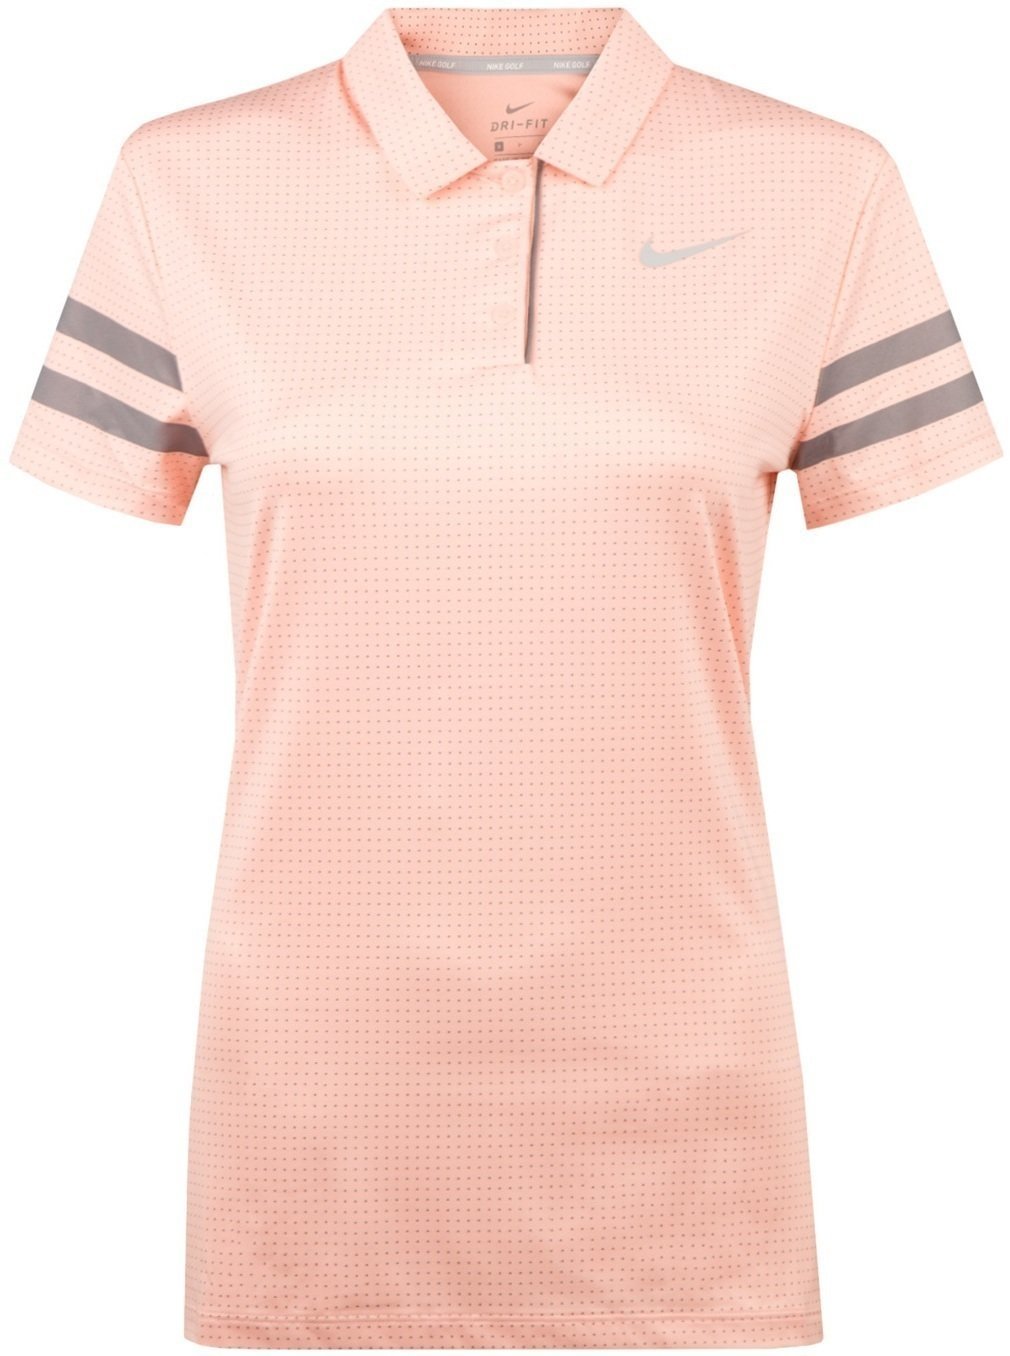 Poolopaita Nike Dri-Fit Printed Womens Polo Storm Pink/Anthracite/White M